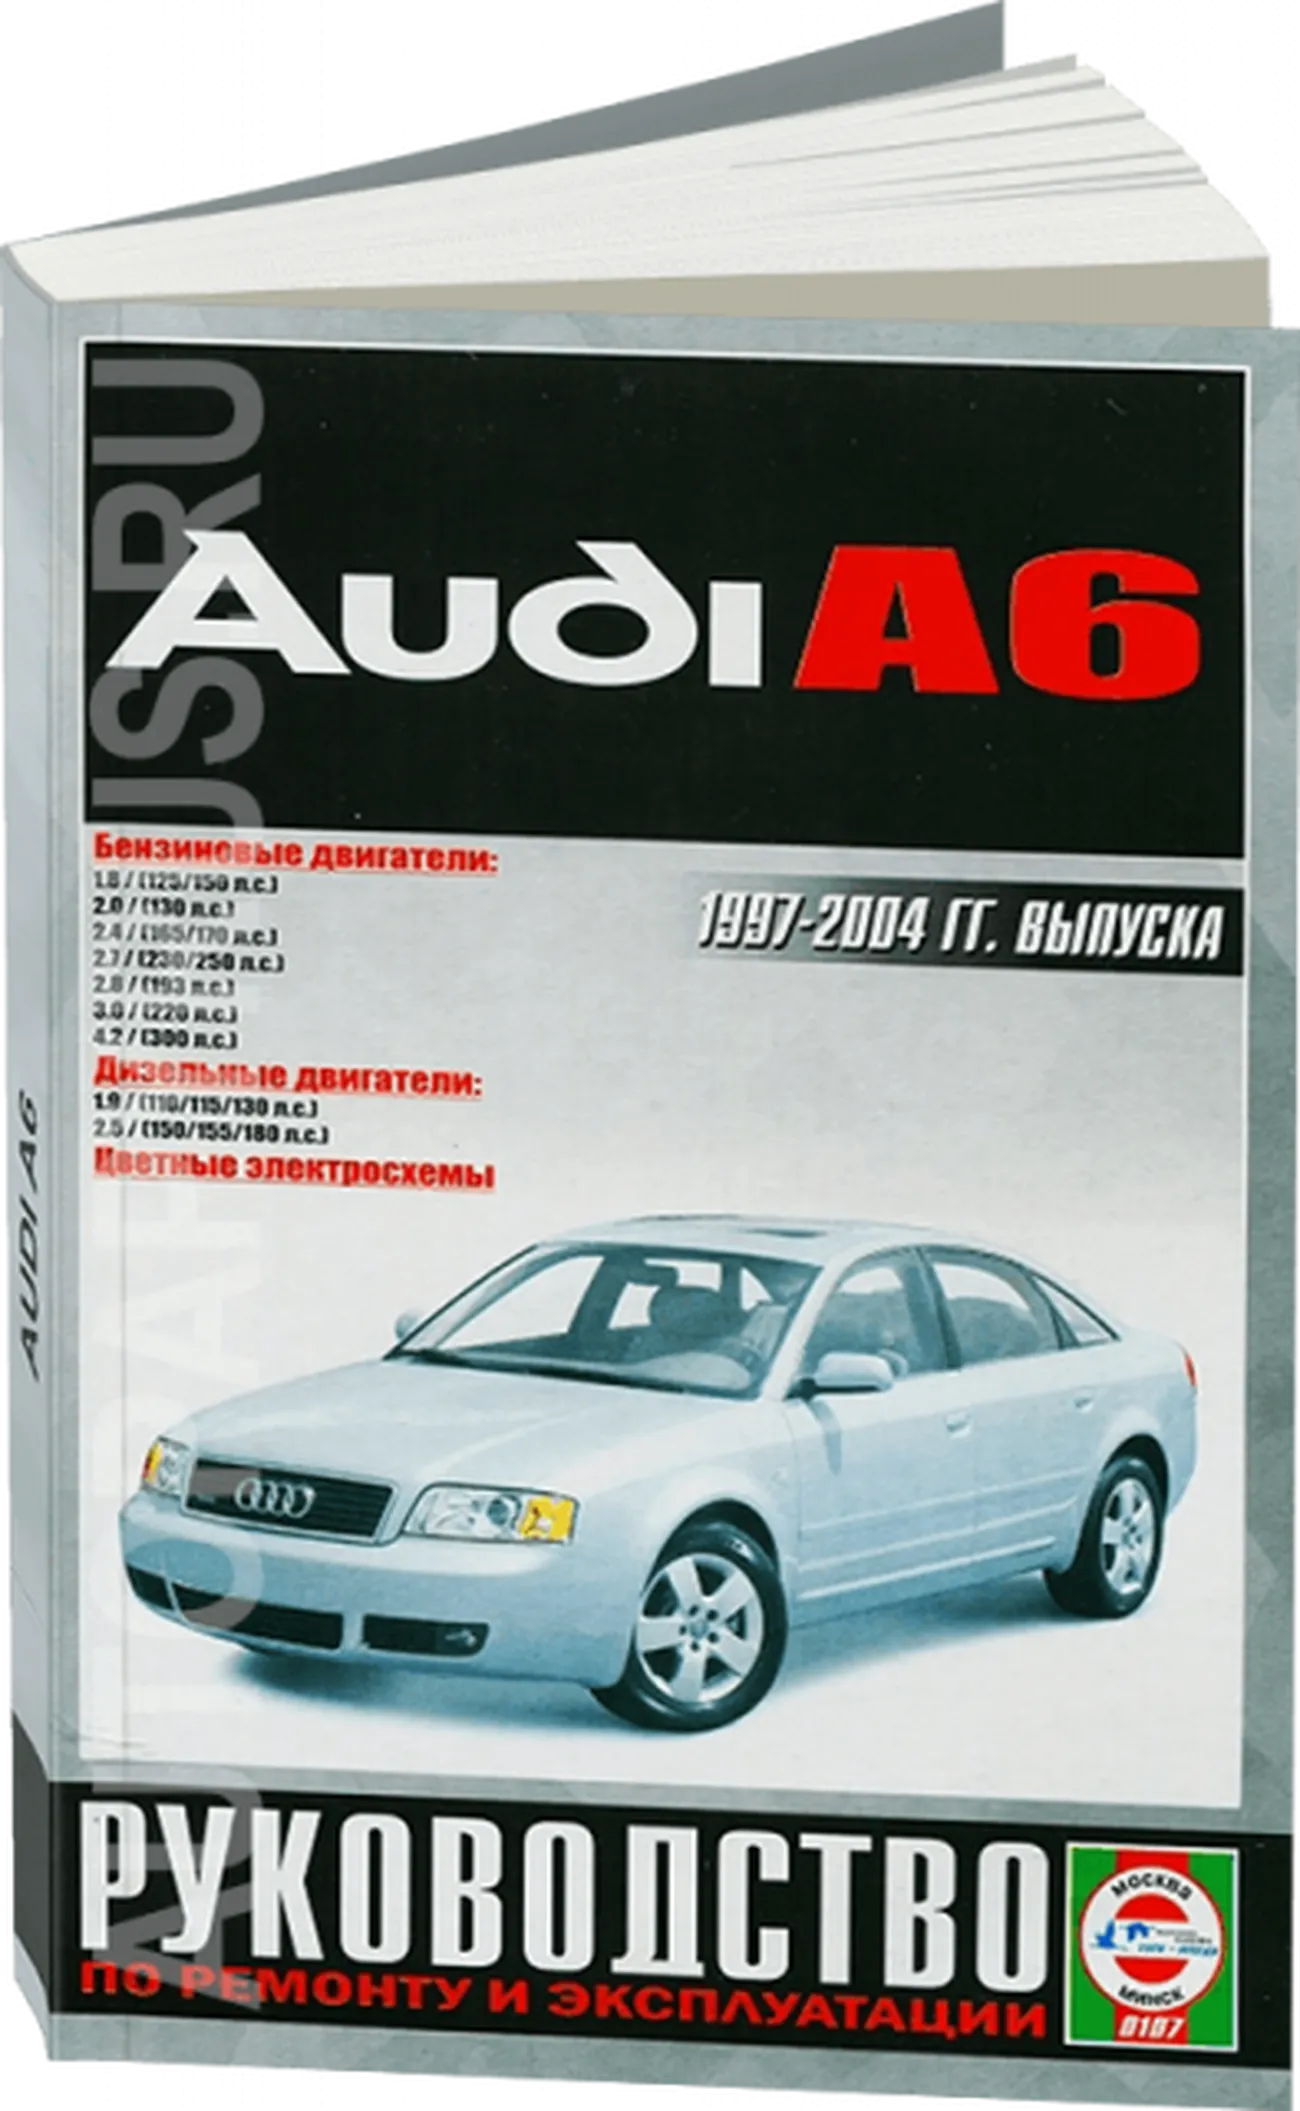 Книга: AUDI A6 (б , д) 1997-2004 г.в., рем., экспл., то | Чижовка